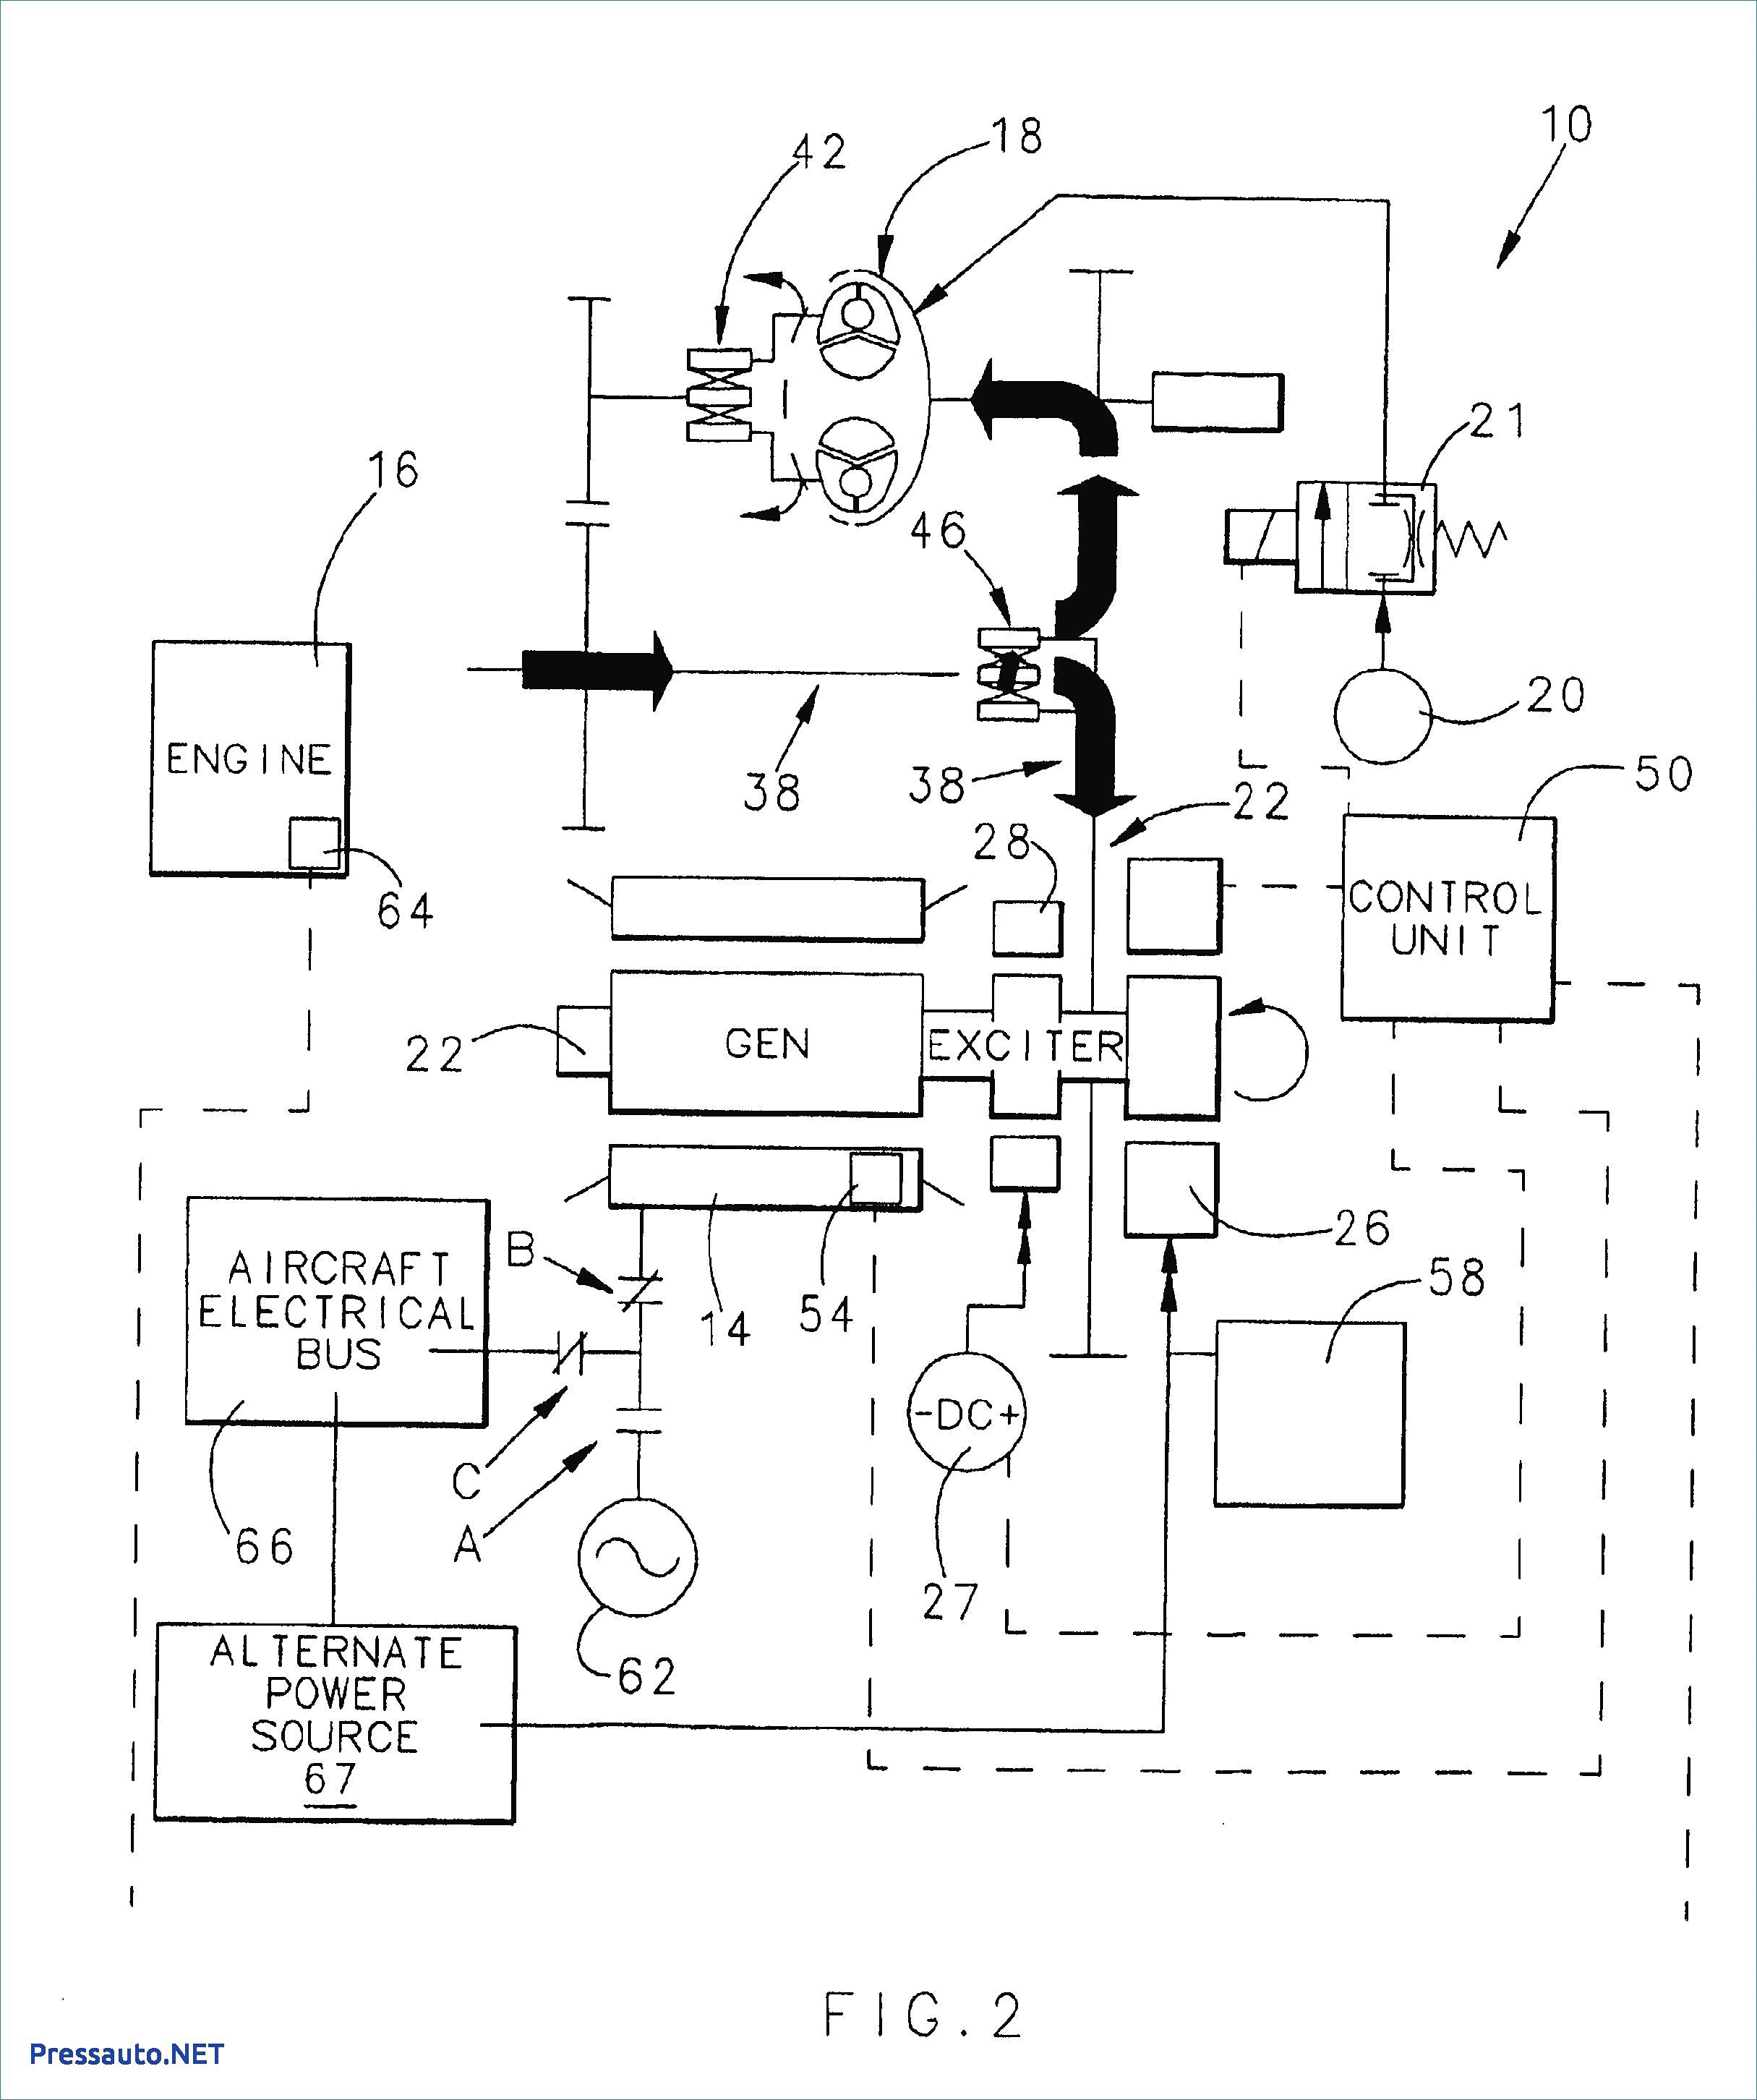 1999 toyota Avalon Engine Diagram 58 Lincoln Wiring Diagram Experts Wiring Diagram • Of 1999 toyota Avalon Engine Diagram